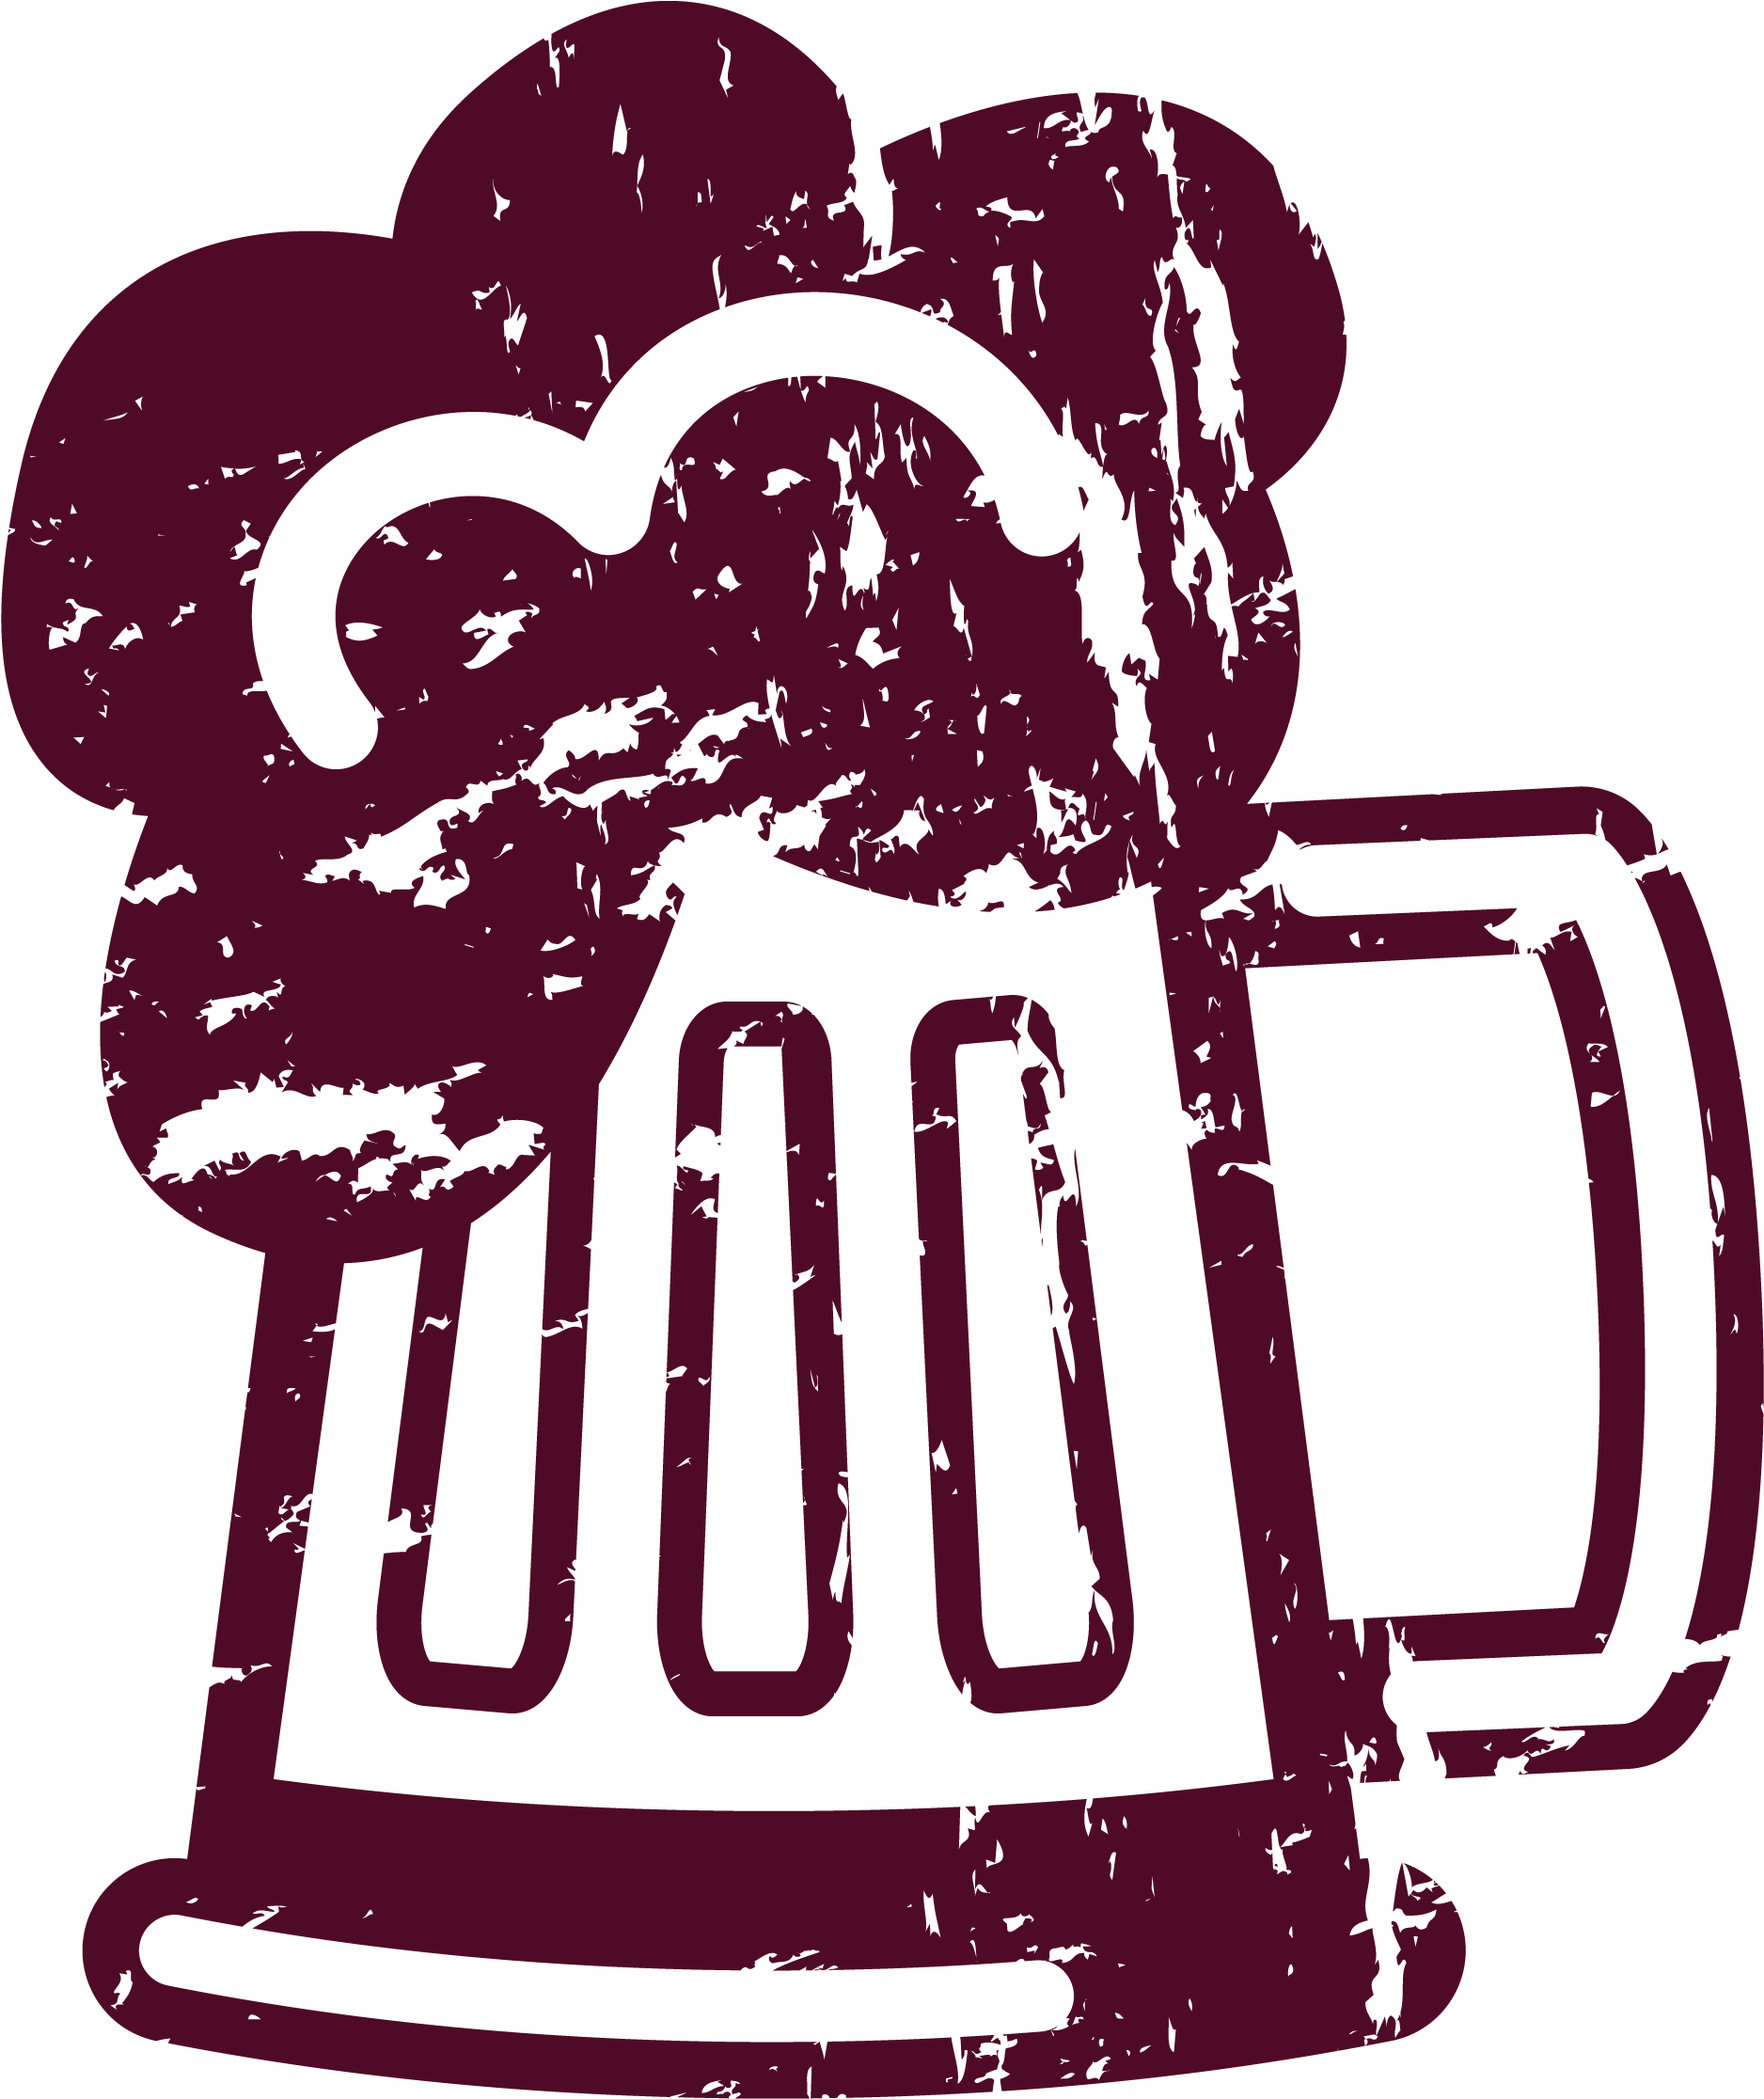 Beer Text With Cartoon Beer Mug B4000 19 (4000x4000), Png Download